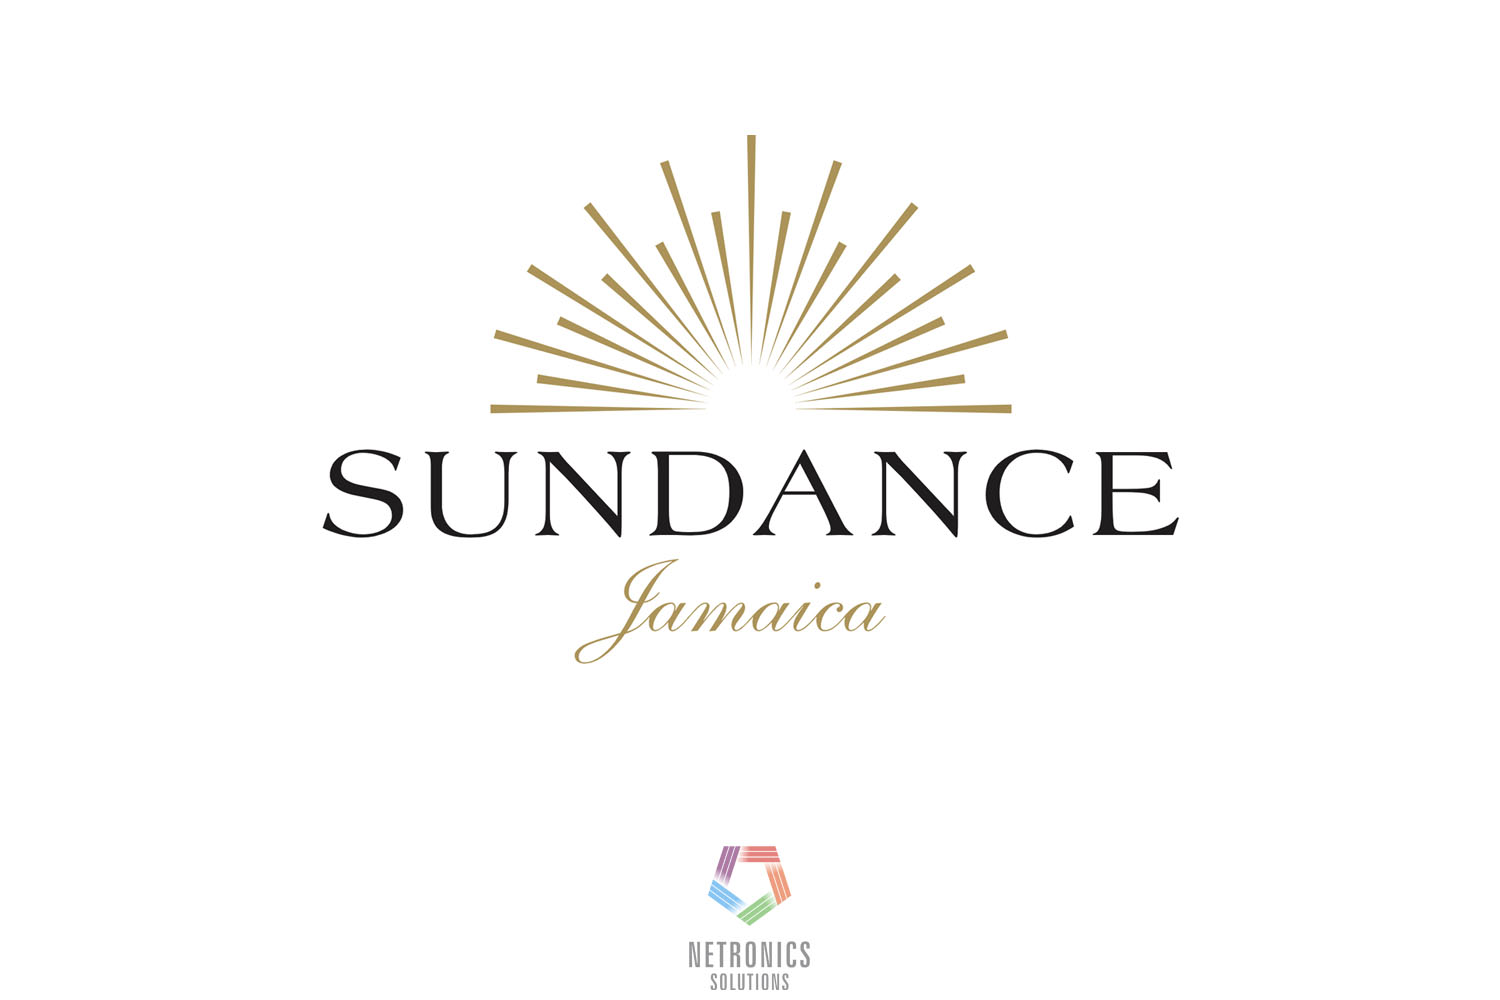 Sundance Jamaica